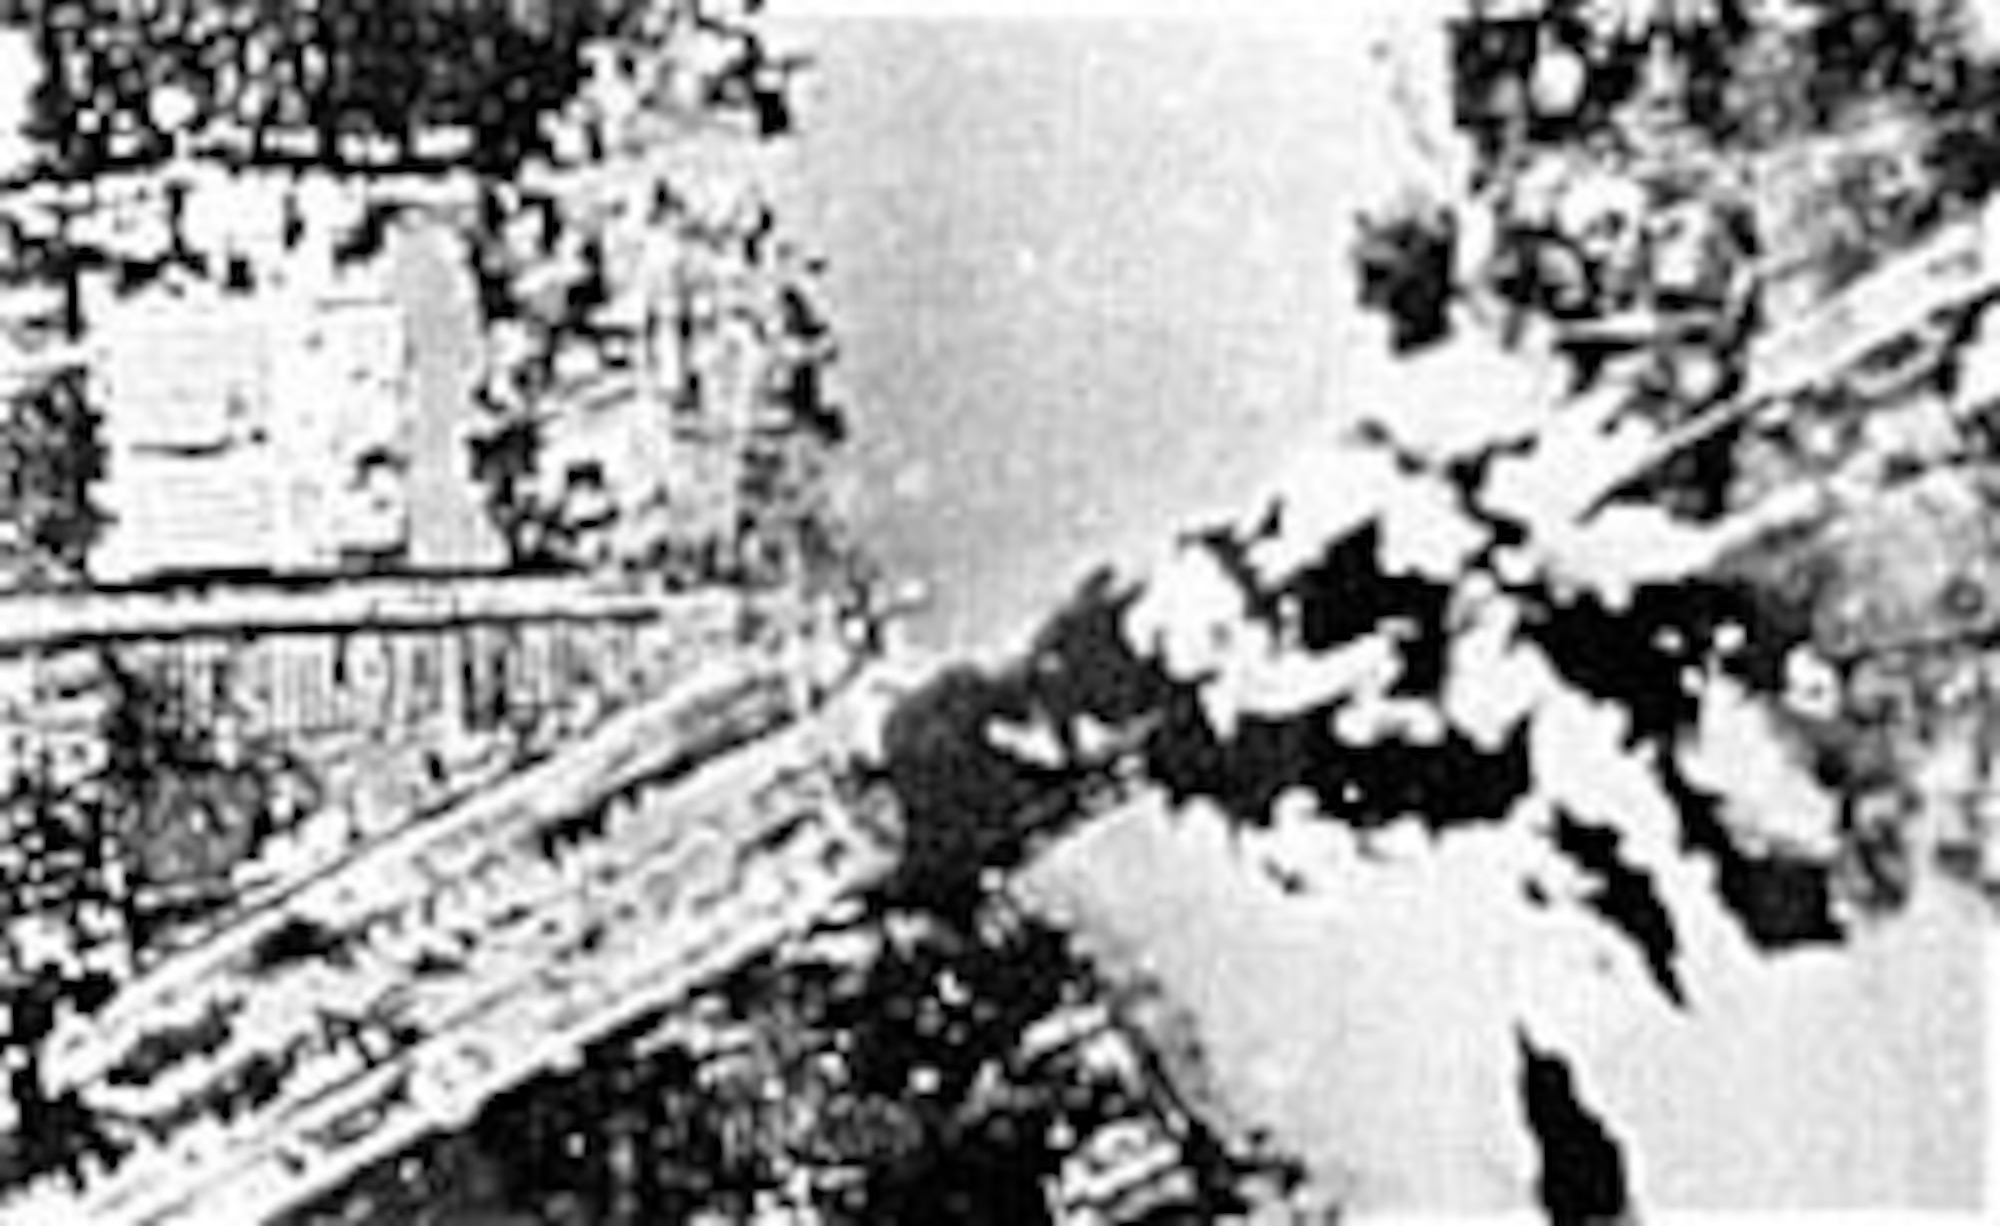 A salvo of bombs hits a bridge in Bangkok, Thailand. (U.S. Air Force photo)